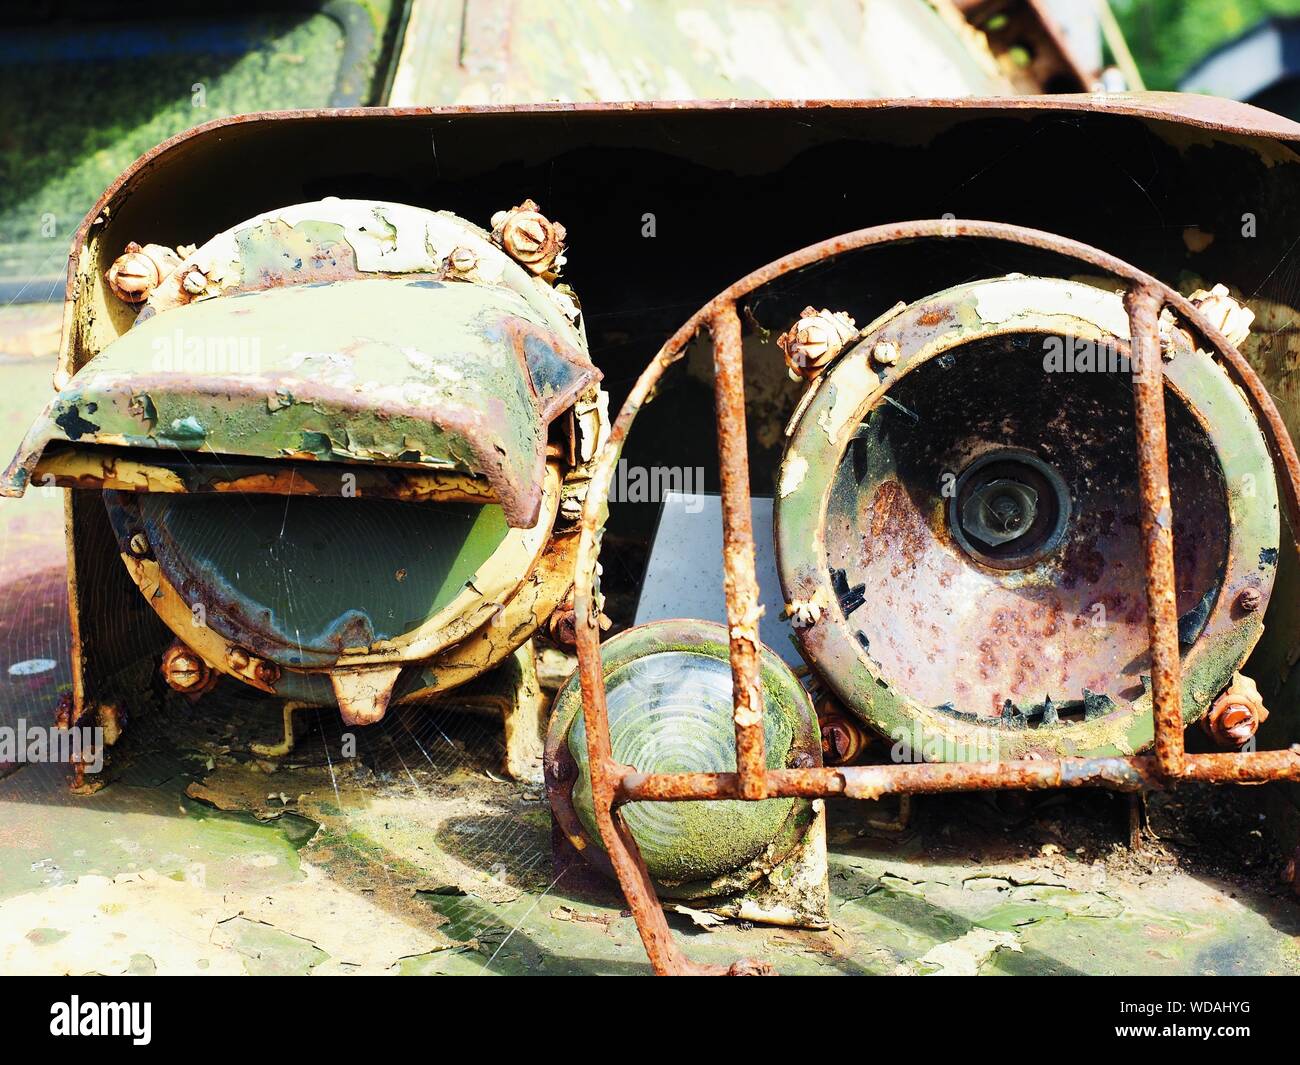 Close-up de equipo militar metálica oxidada Foto de stock